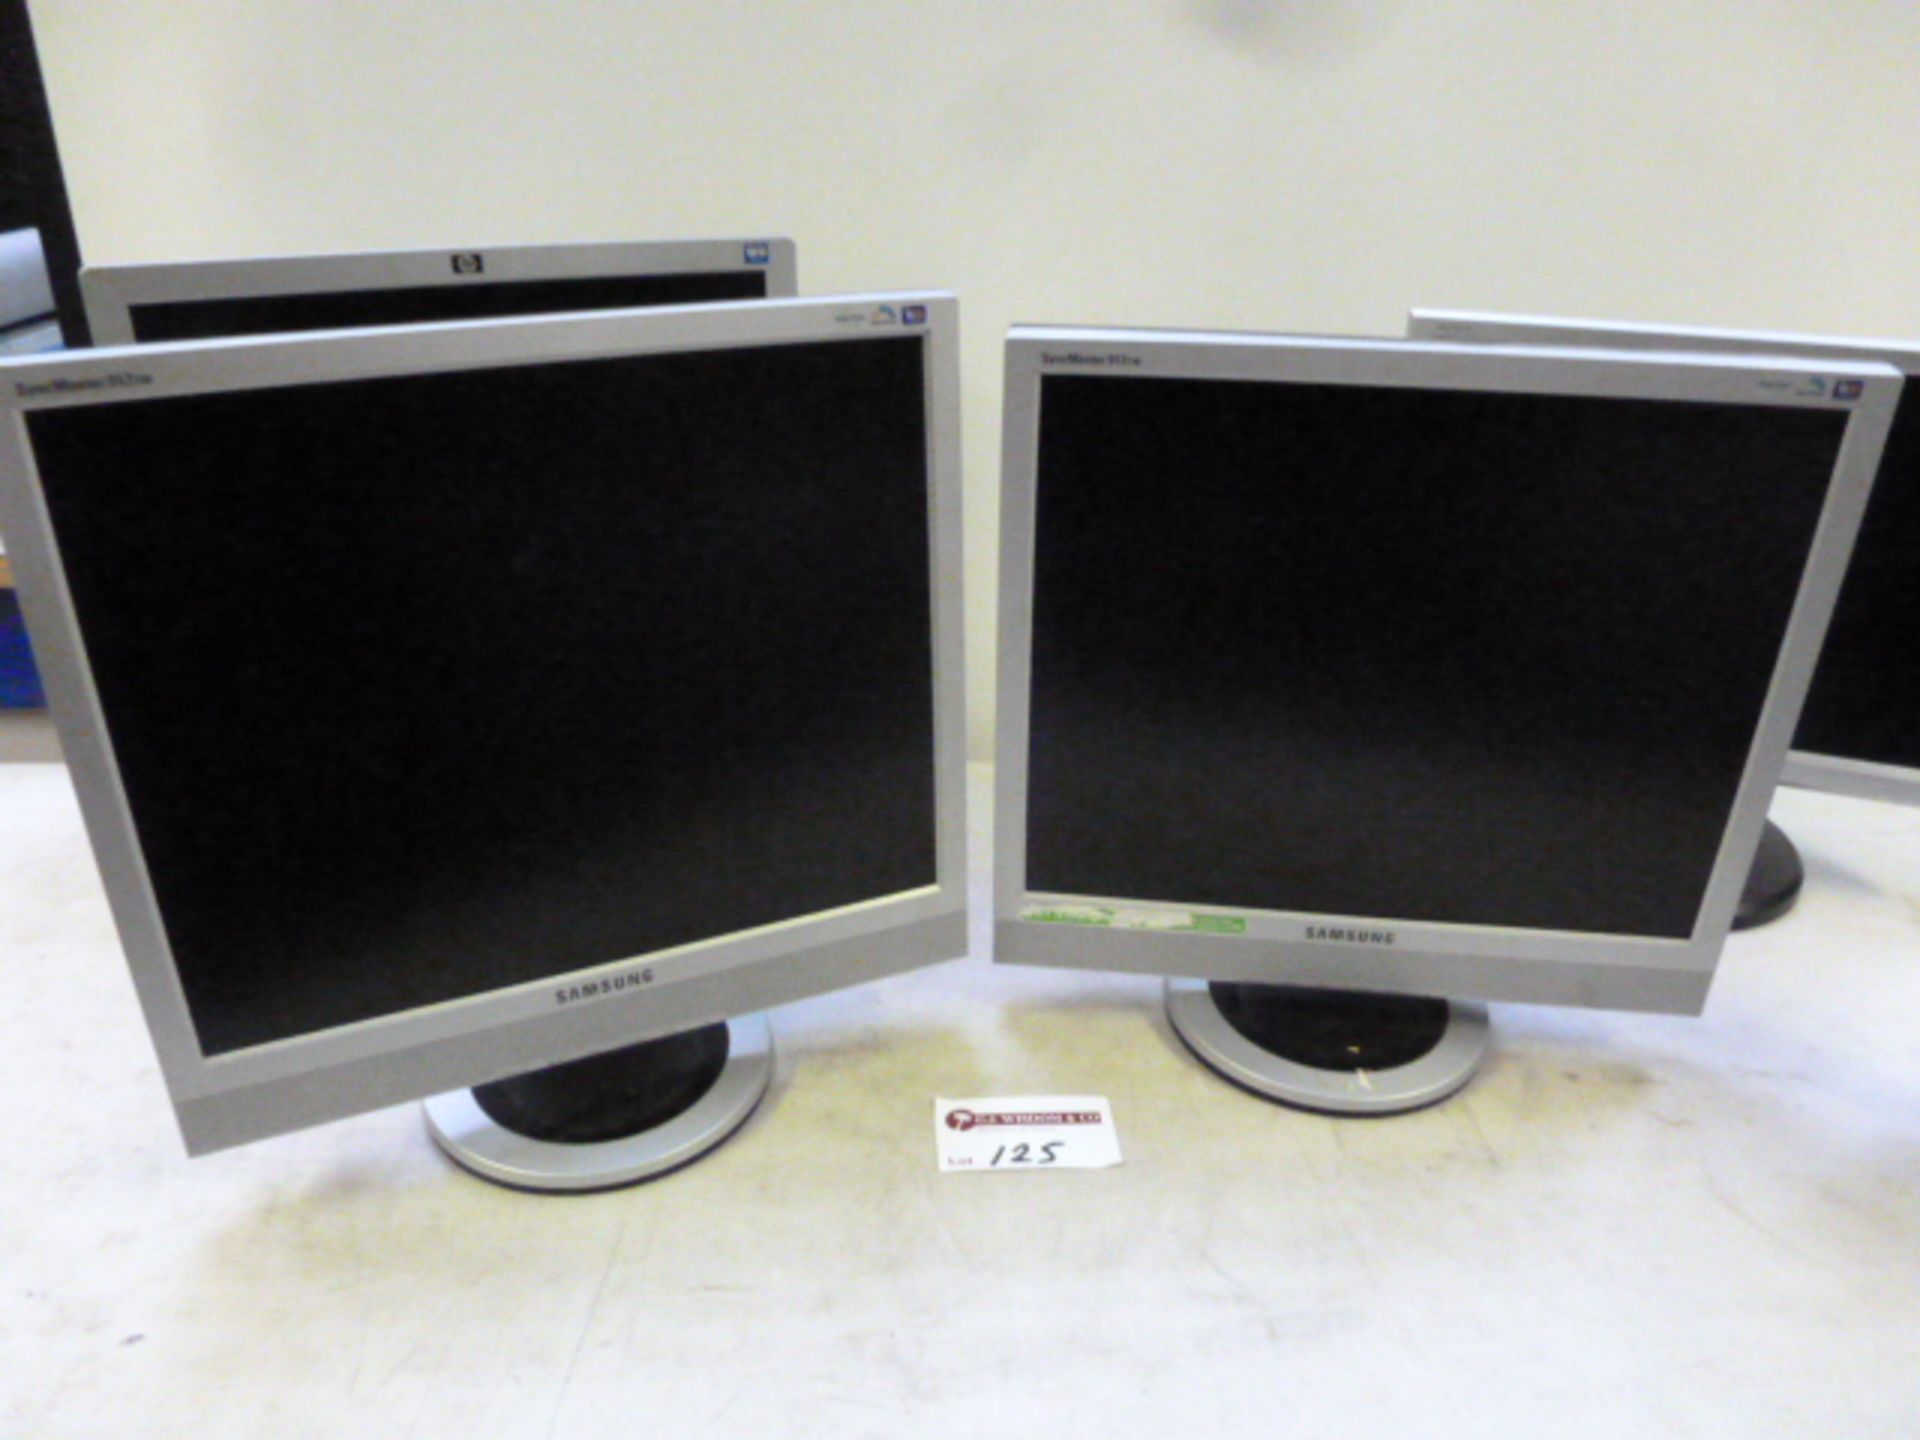 5 x Assorted 19" Computer Monitors, 2 x Samsung, 1 x HP x 1 x Hanns-G & 1 x Yuraku. (As Viewed) - Image 3 of 6